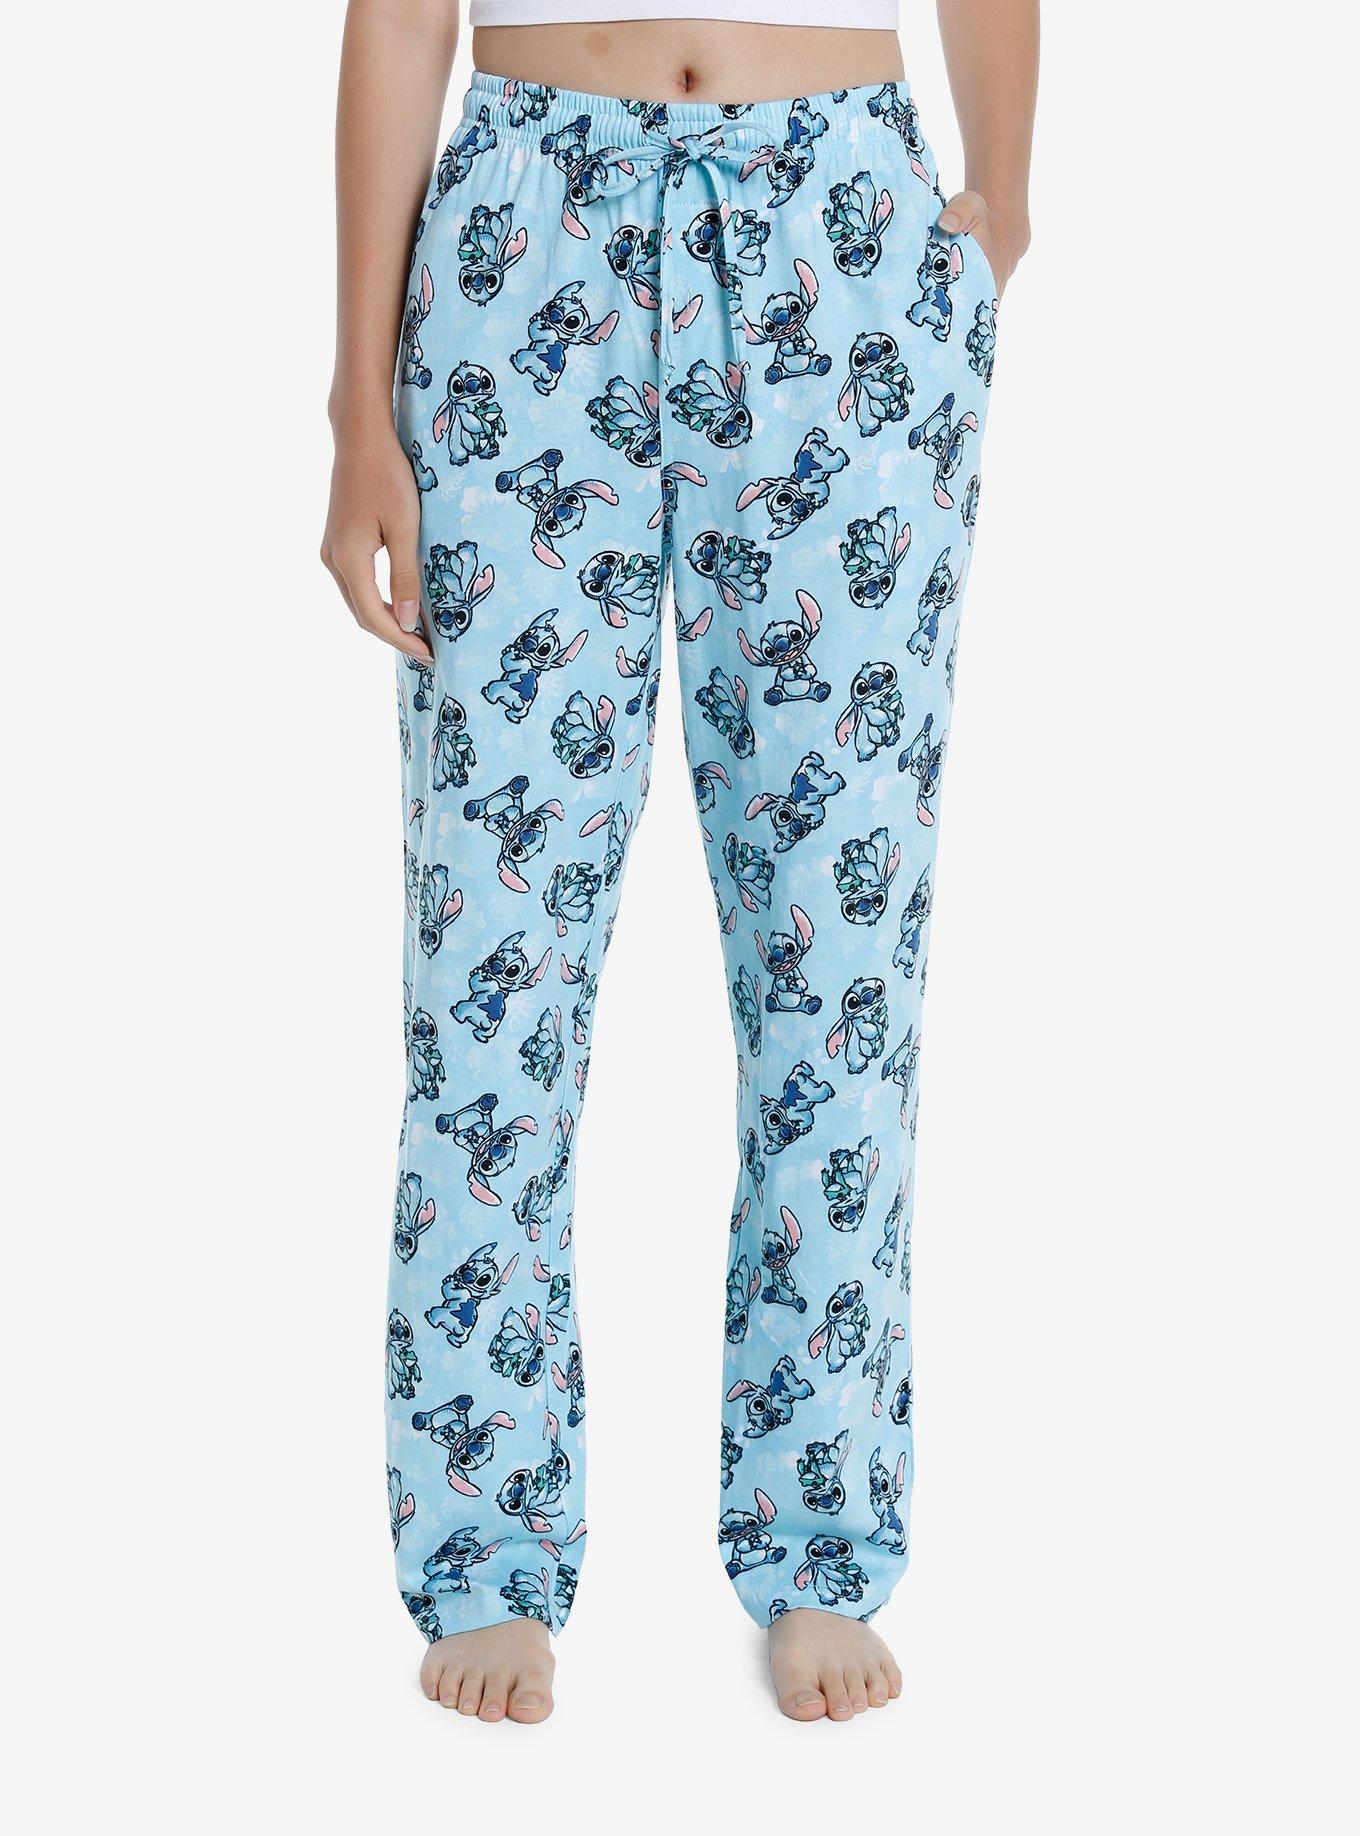 Limited Too, Pajamas, Limited Too Snoopy Pajama Pants